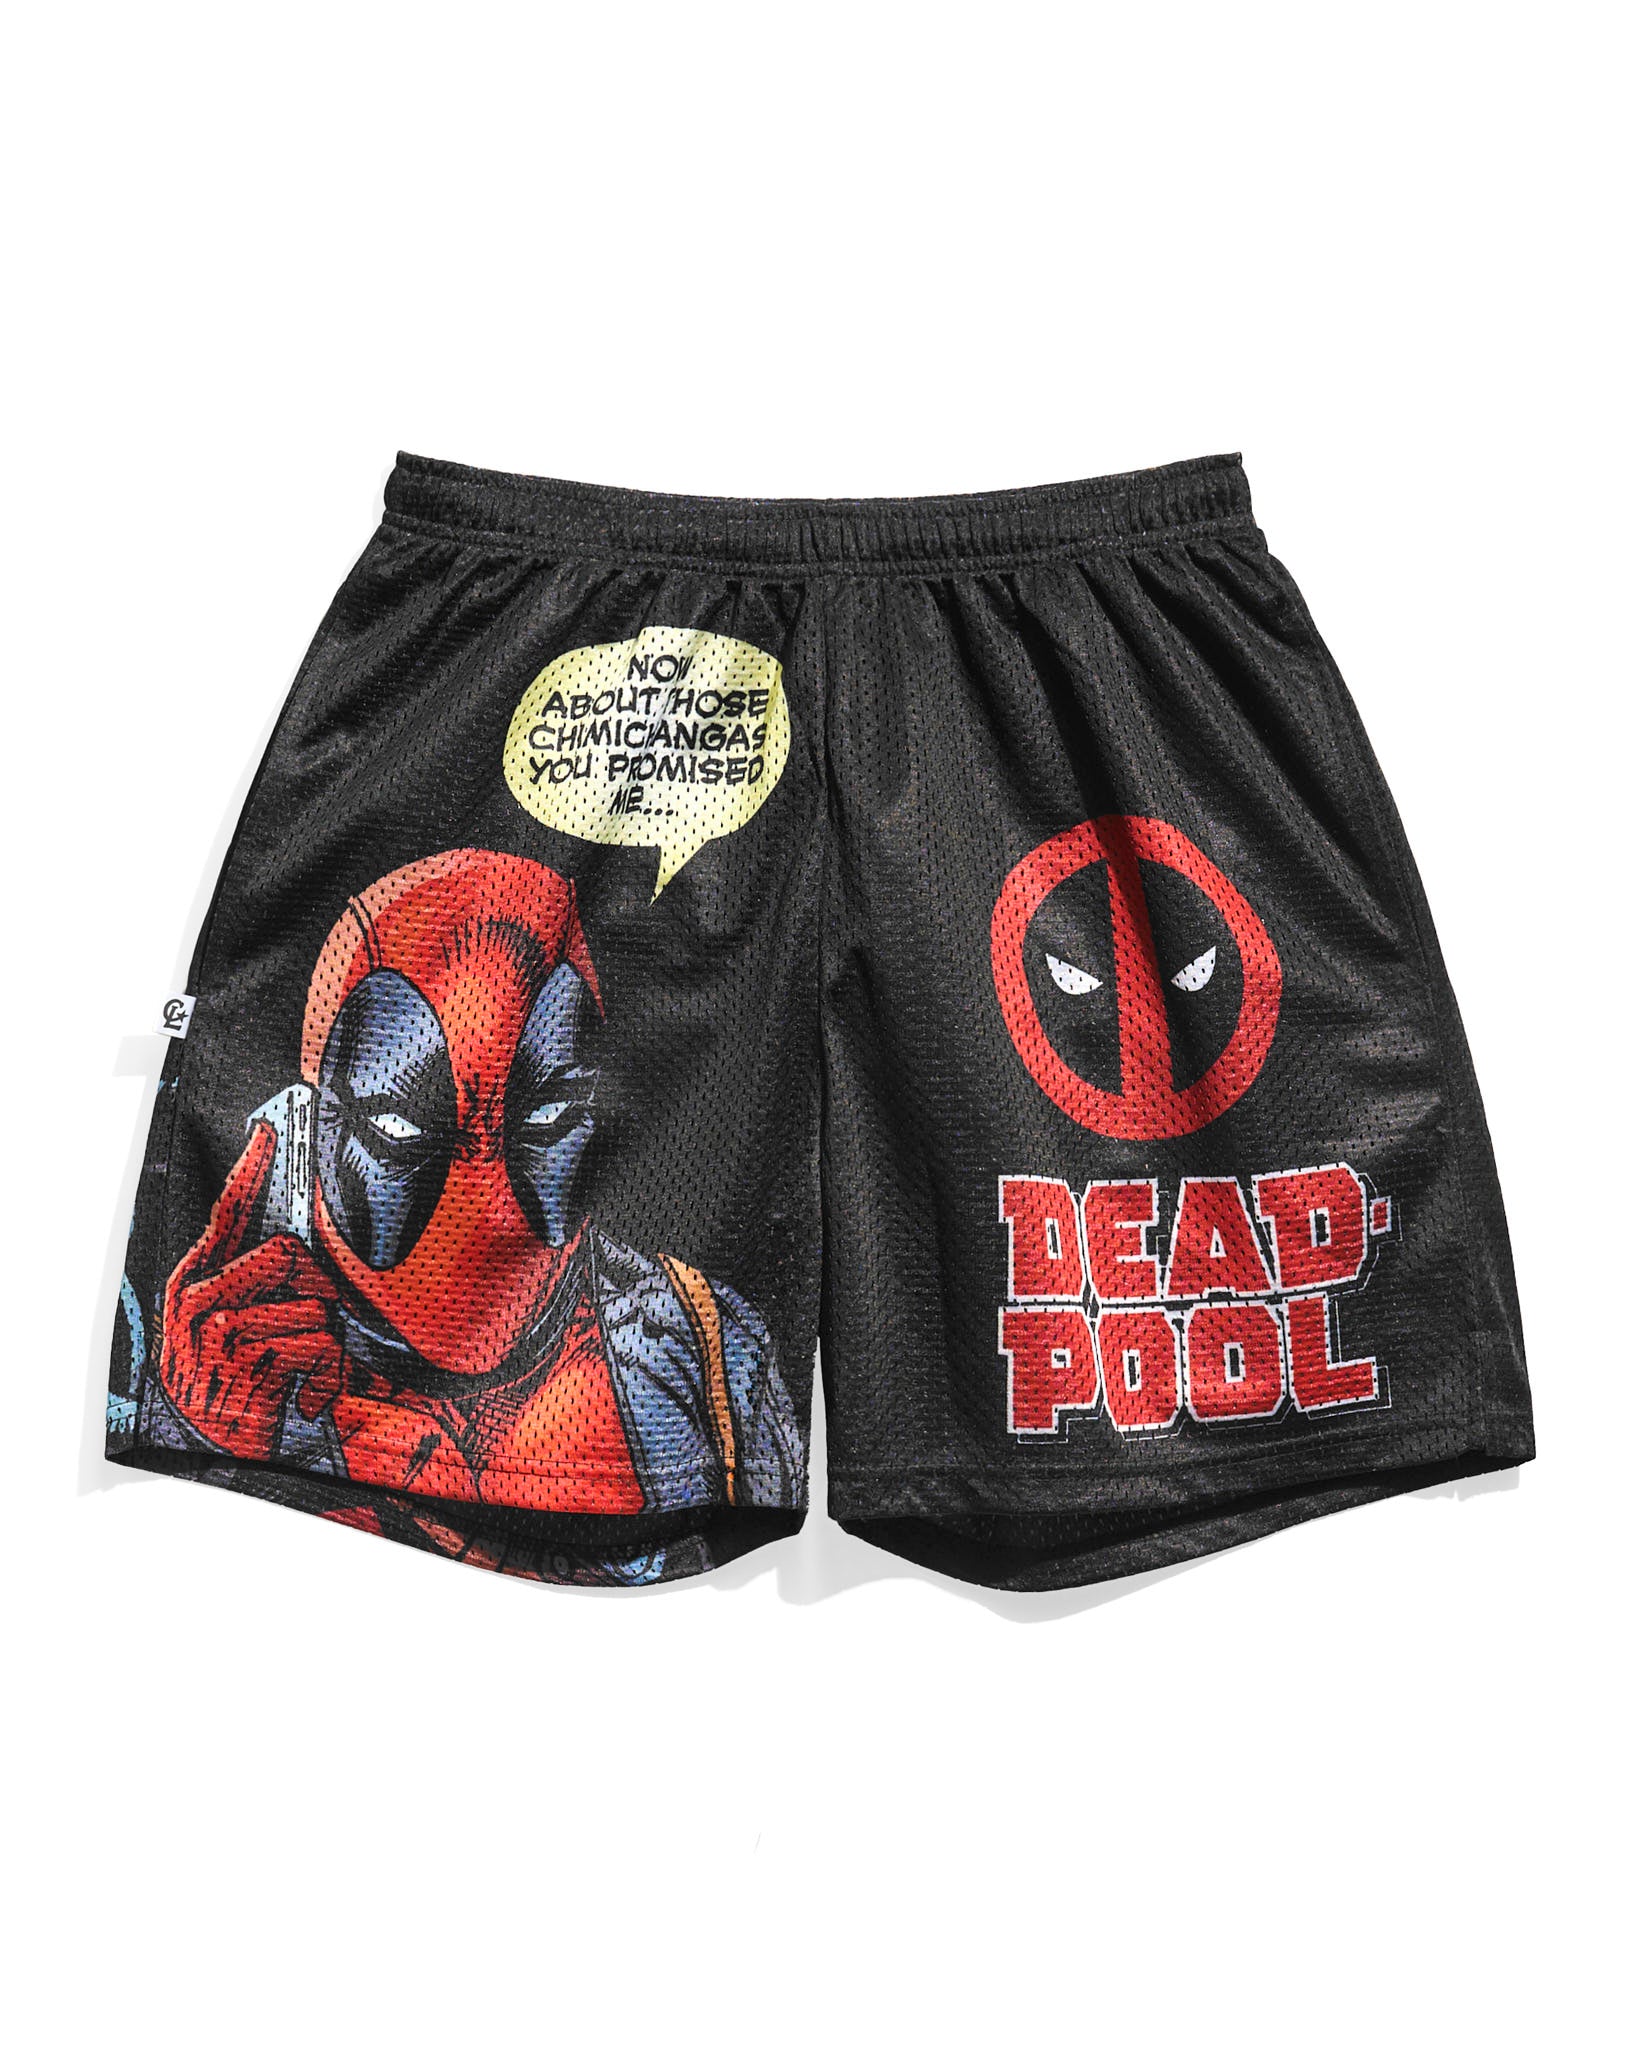 Deadpool Chimichangas Retro Shorts